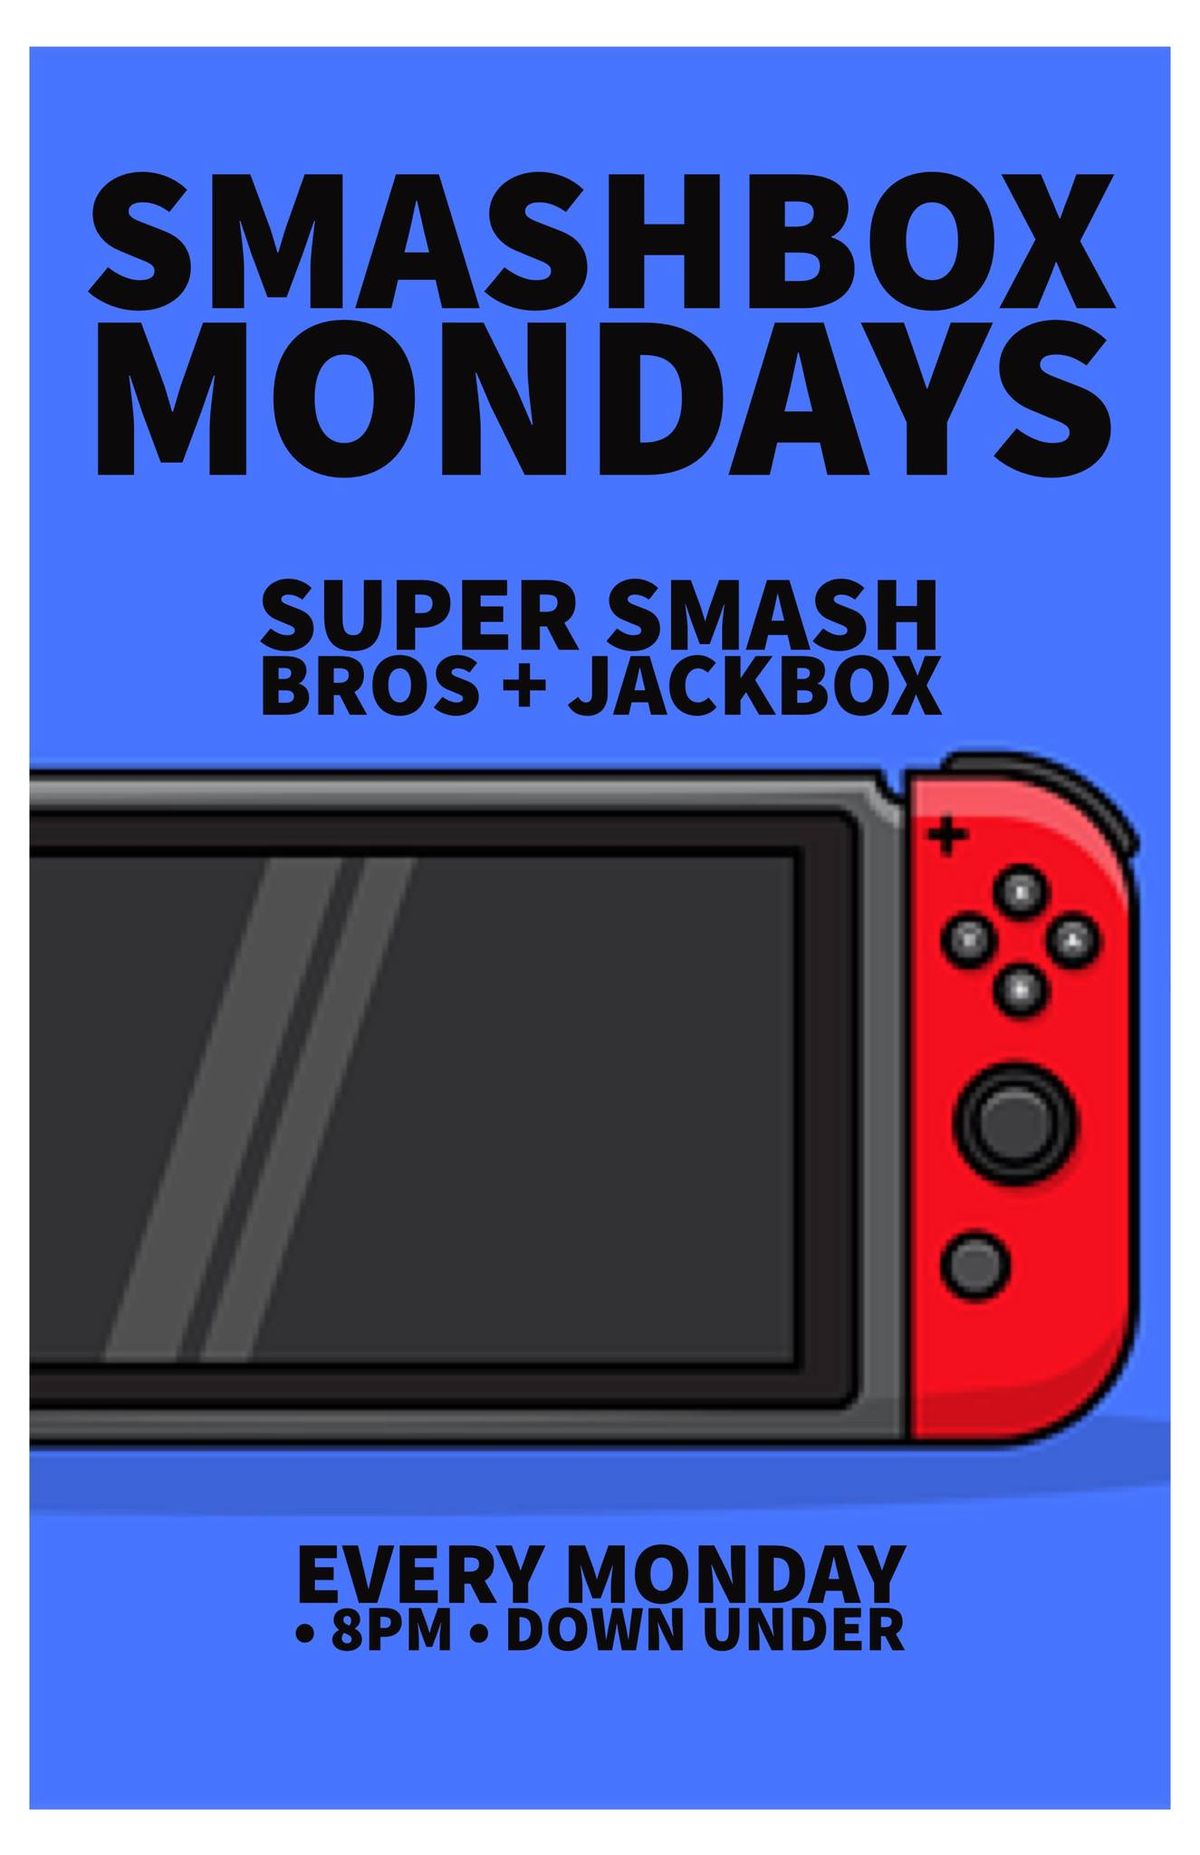 Super Smash Bros and Jackbox